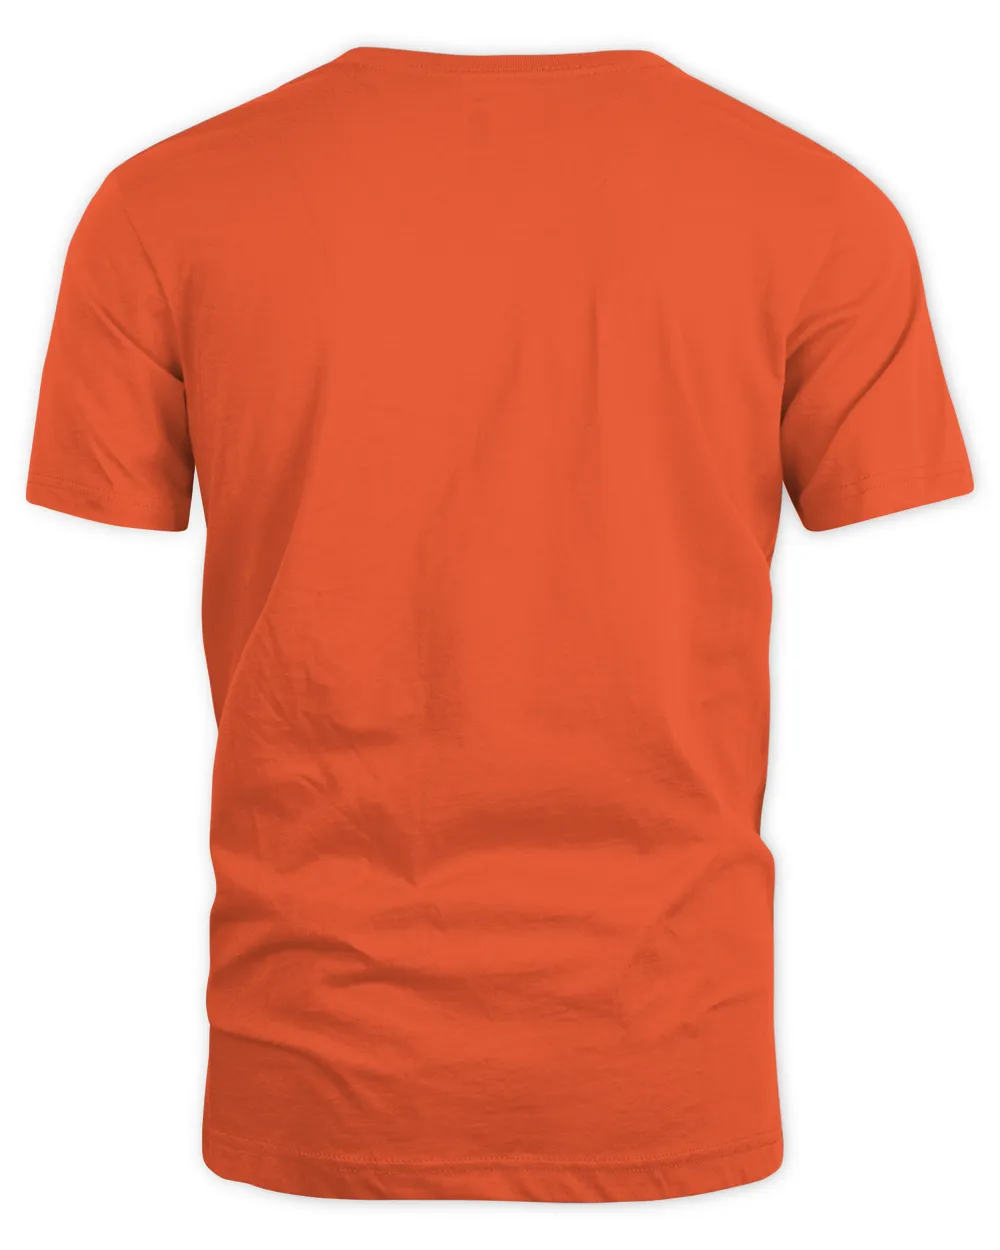 Mlb Shop Men's Baltimore Orioles Orange Authentic Collection Velocity  Practice Performance T-Shirt